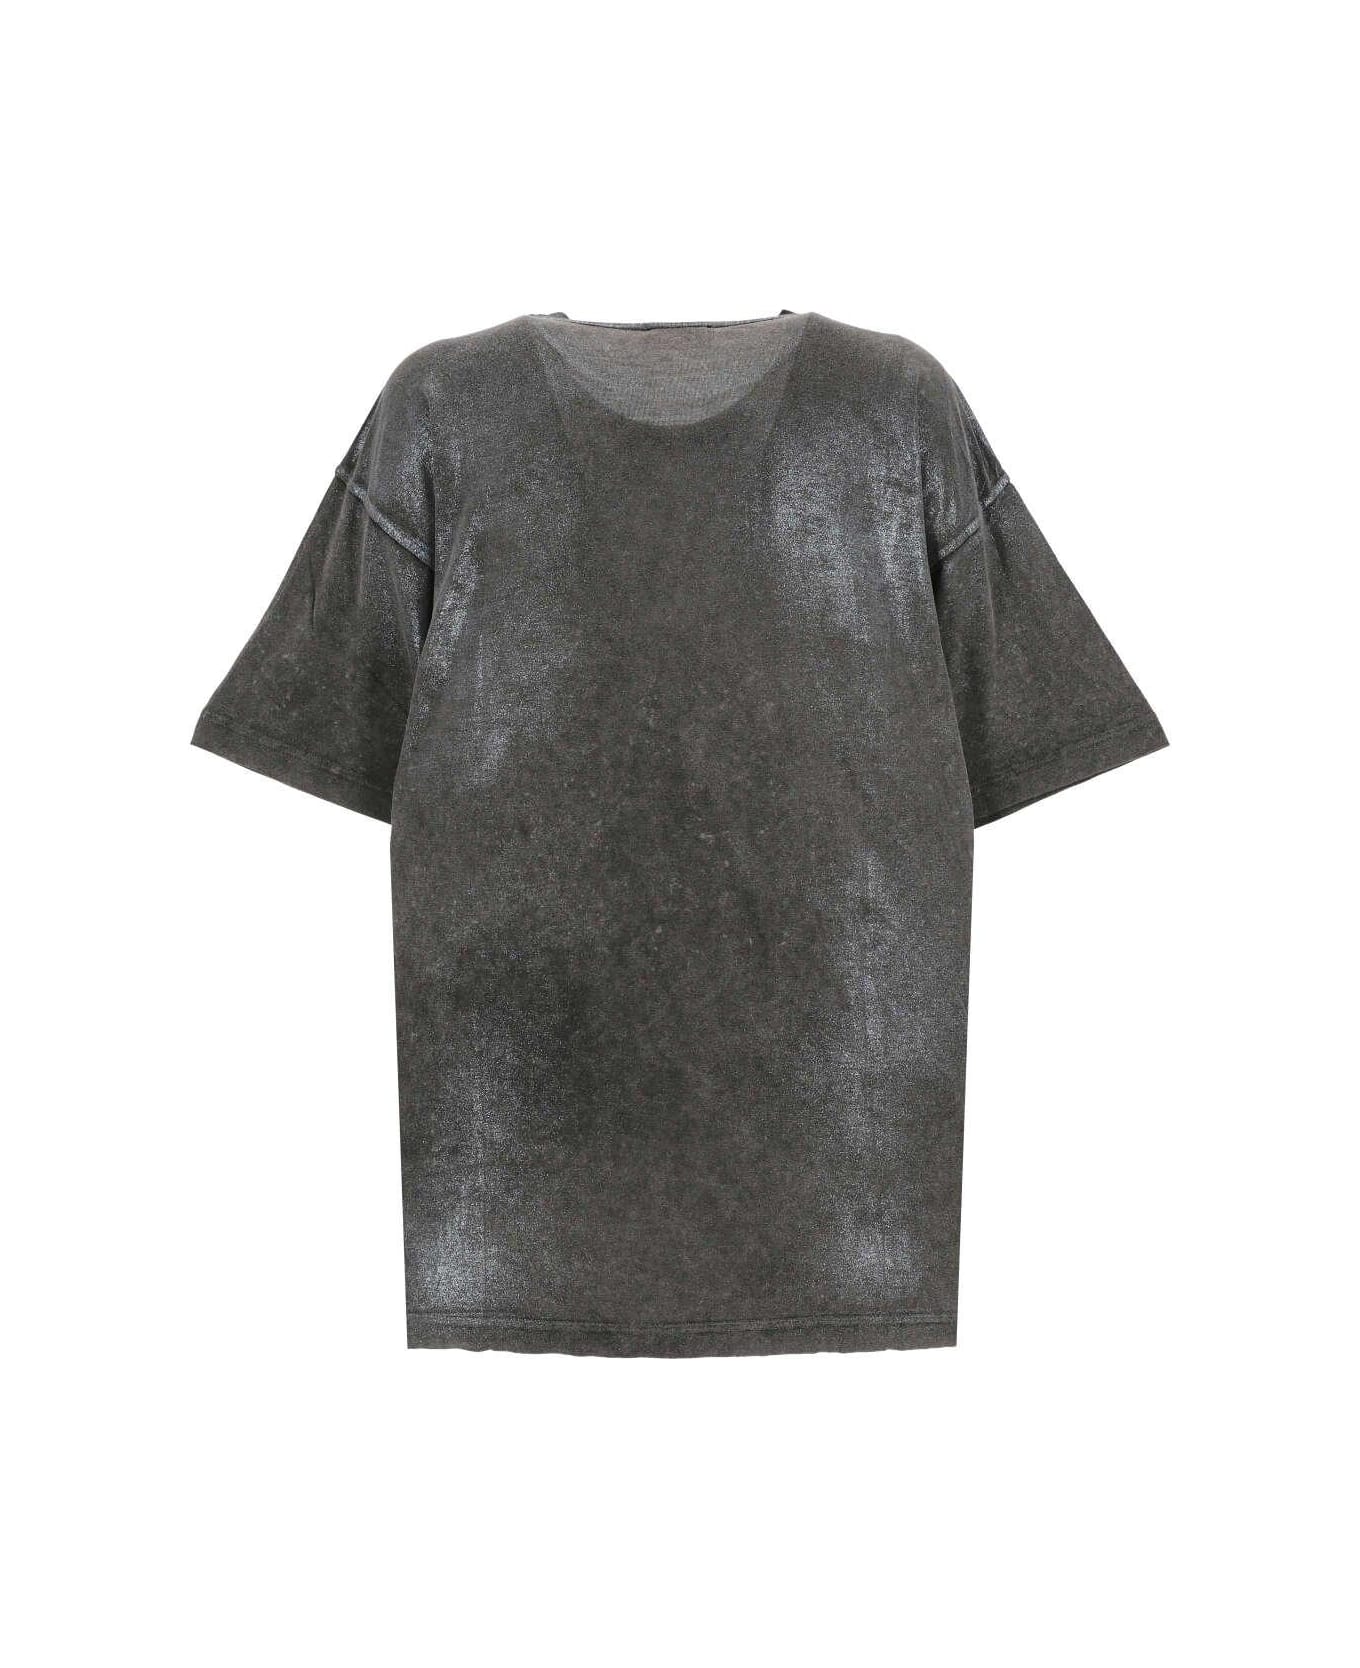 Diesel T-buxt Faded Metallic T-shirt - Non definito Tシャツ